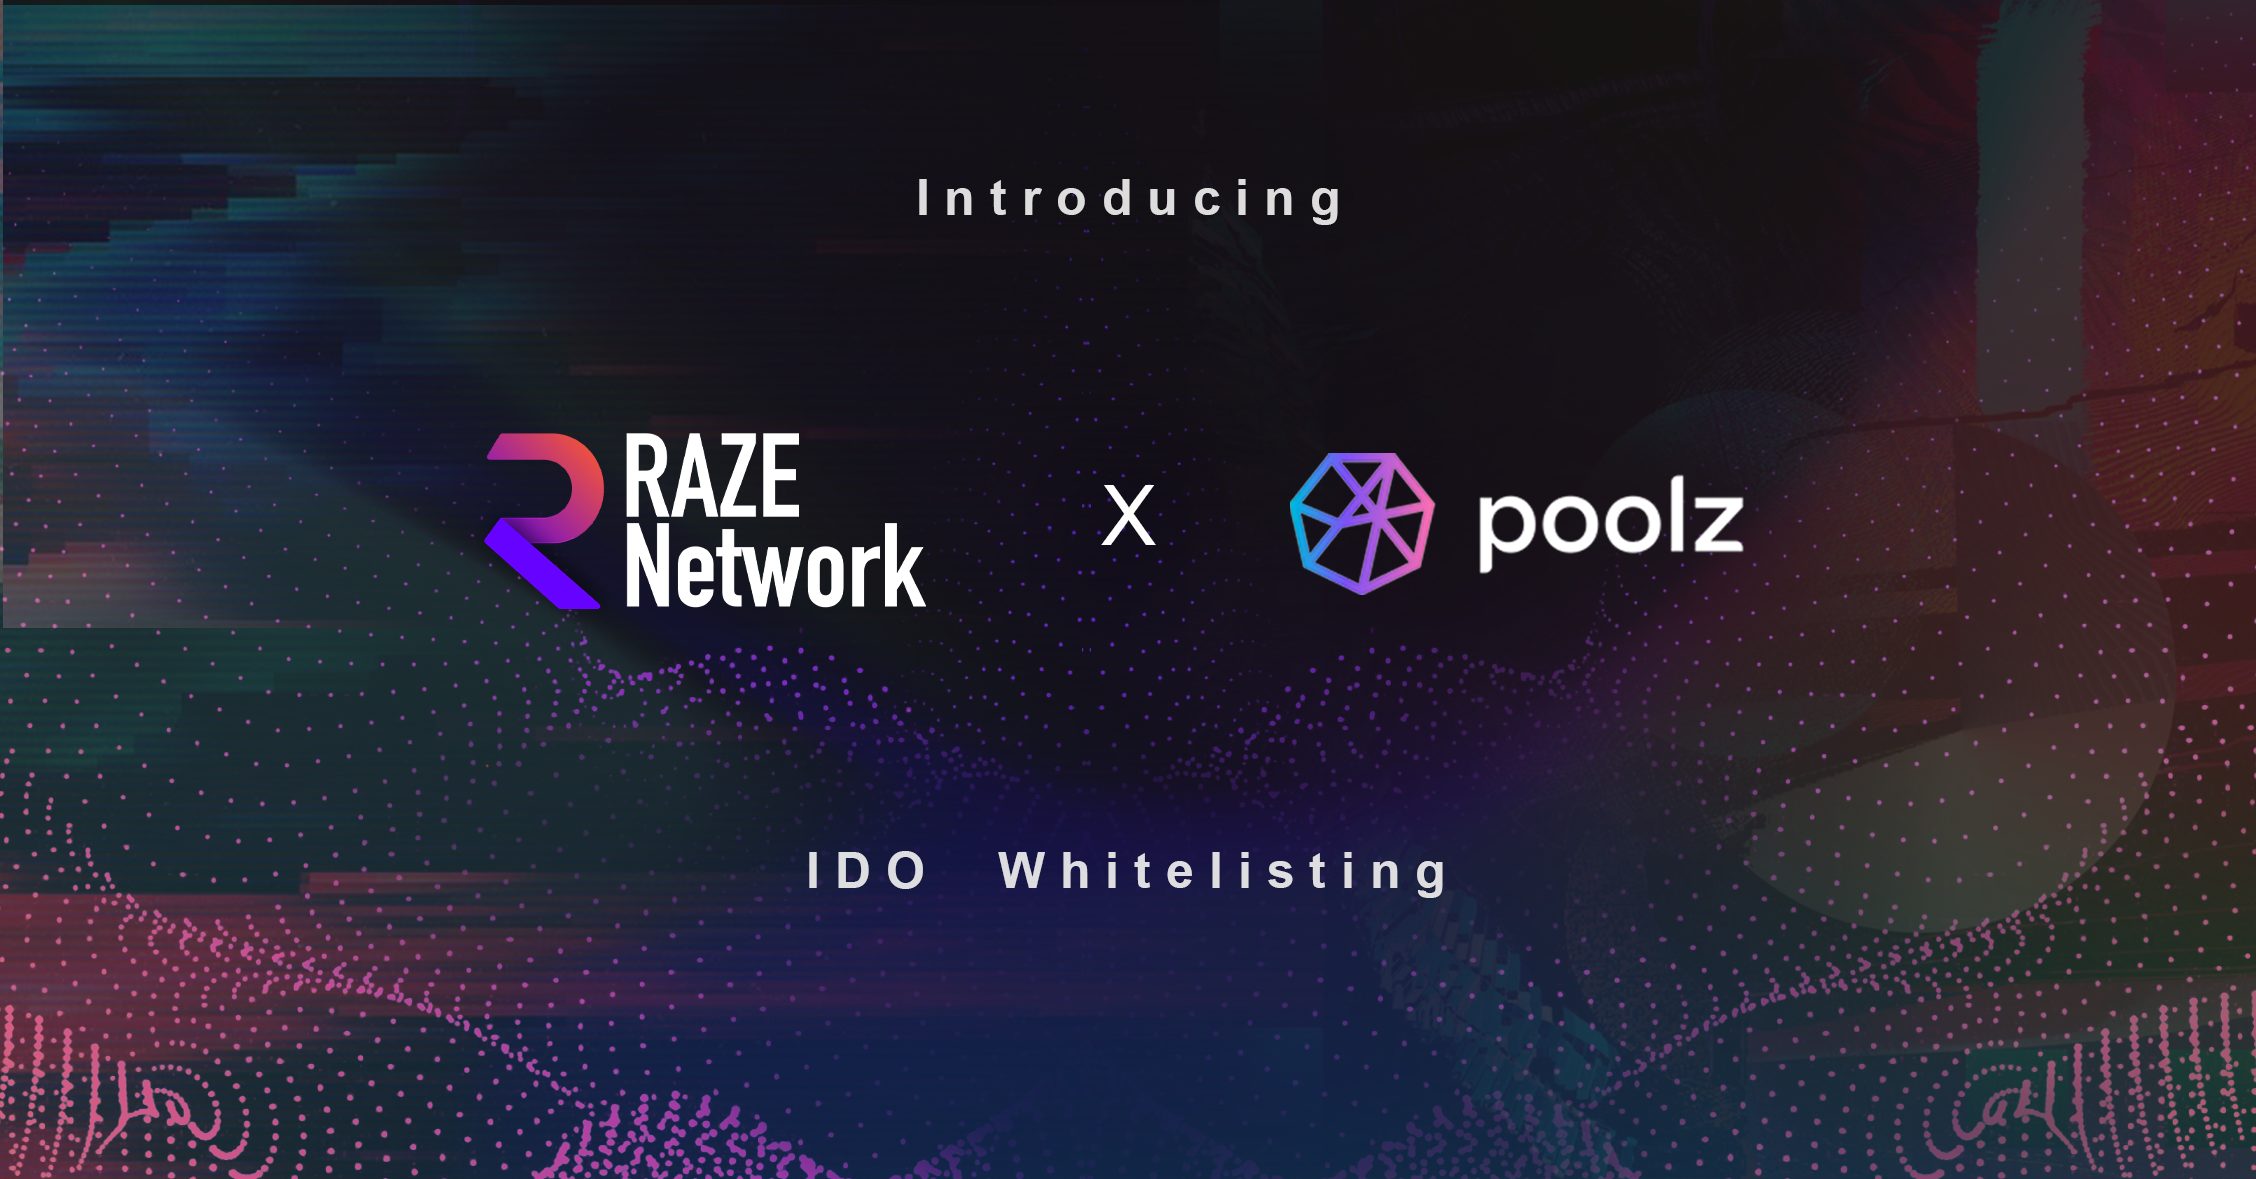 Raze Network & Poolz IDO Whitelisting